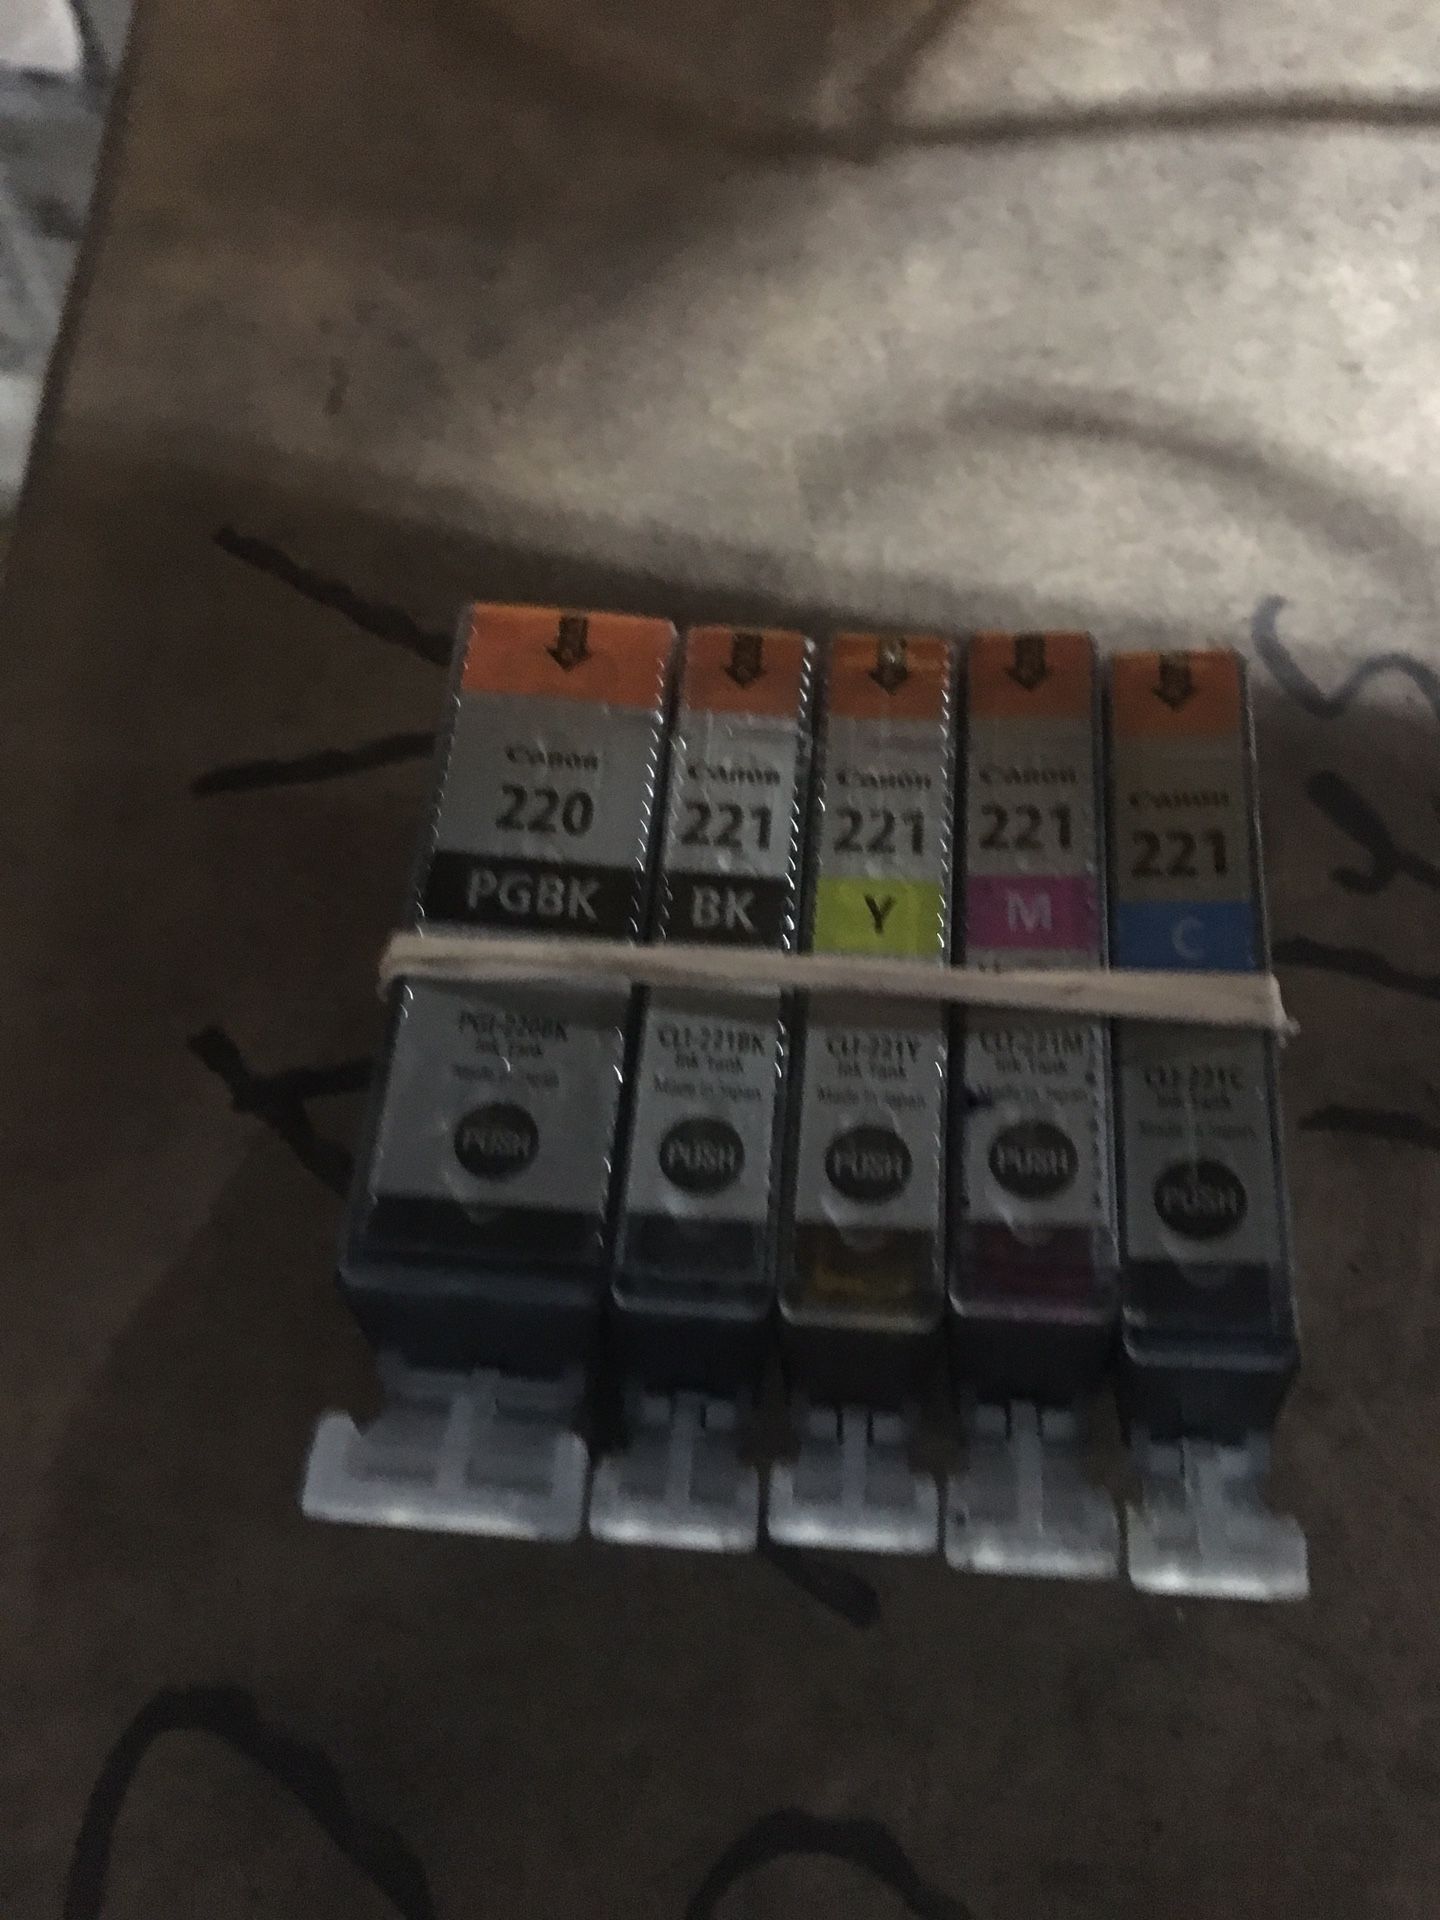 Ink cartridges for printer/computer